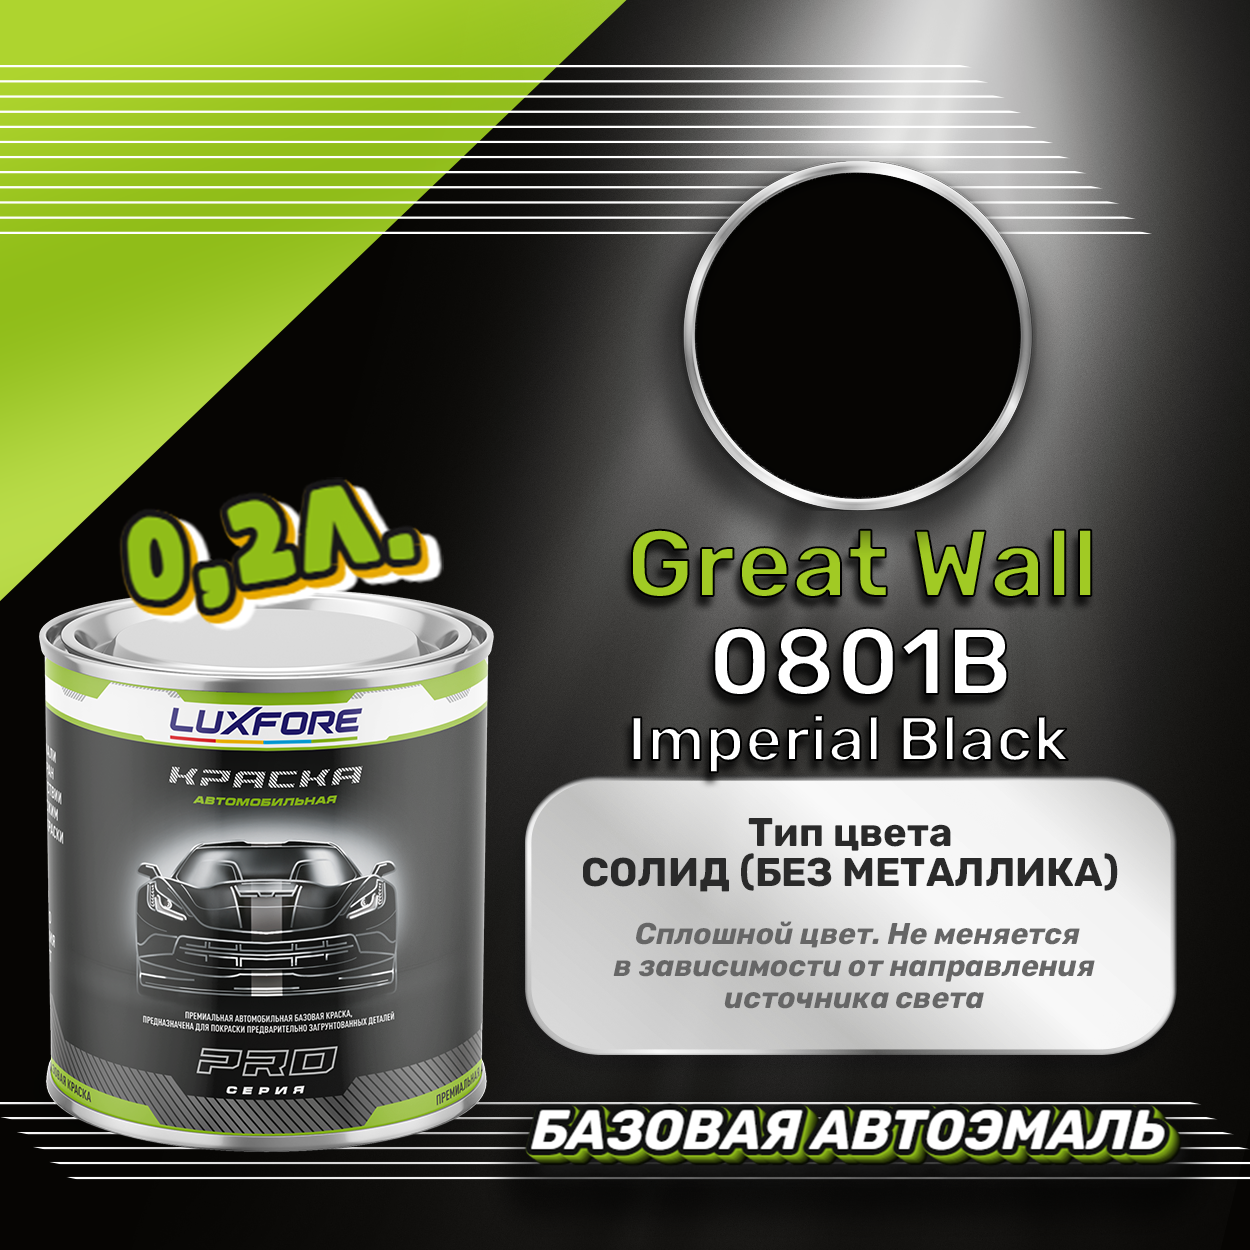 Luxfore краска базовая эмаль Great Wall 0801B Imperial Black 200 мл